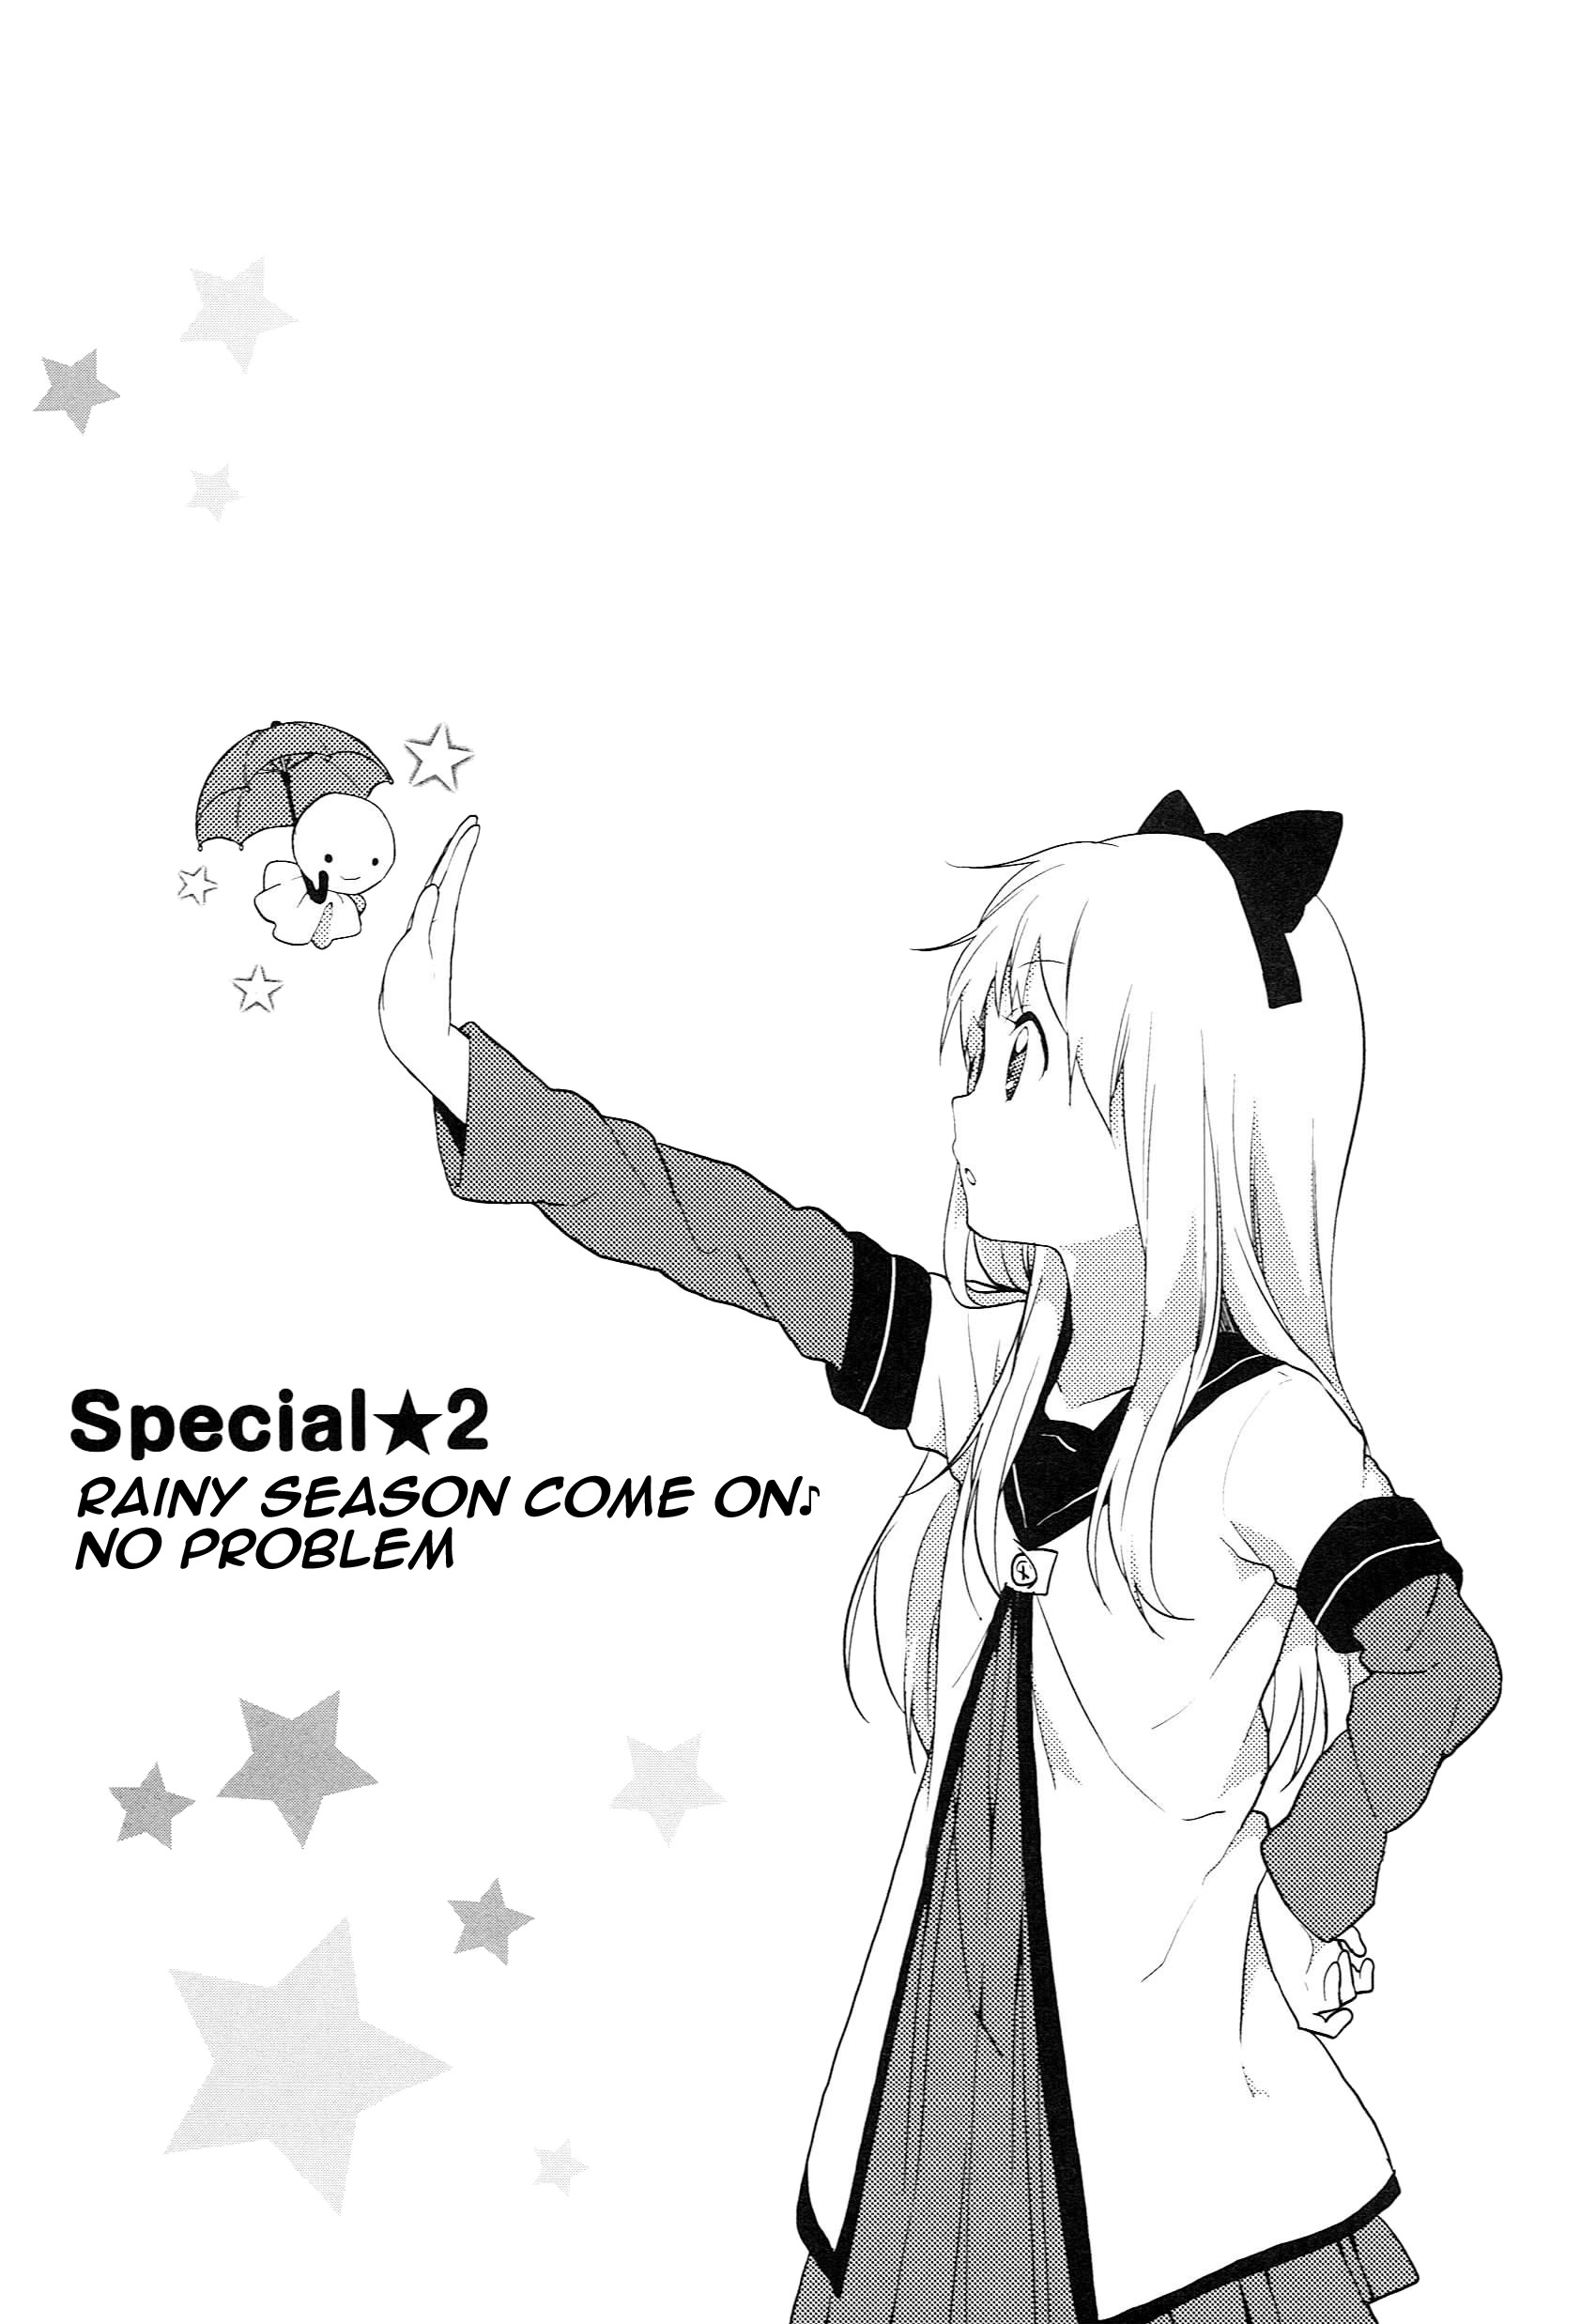 Yuru Yuri Vol.6 Chapter 51.04: Special 2 - Rainy Season Come On♪ No Problem - Picture 1